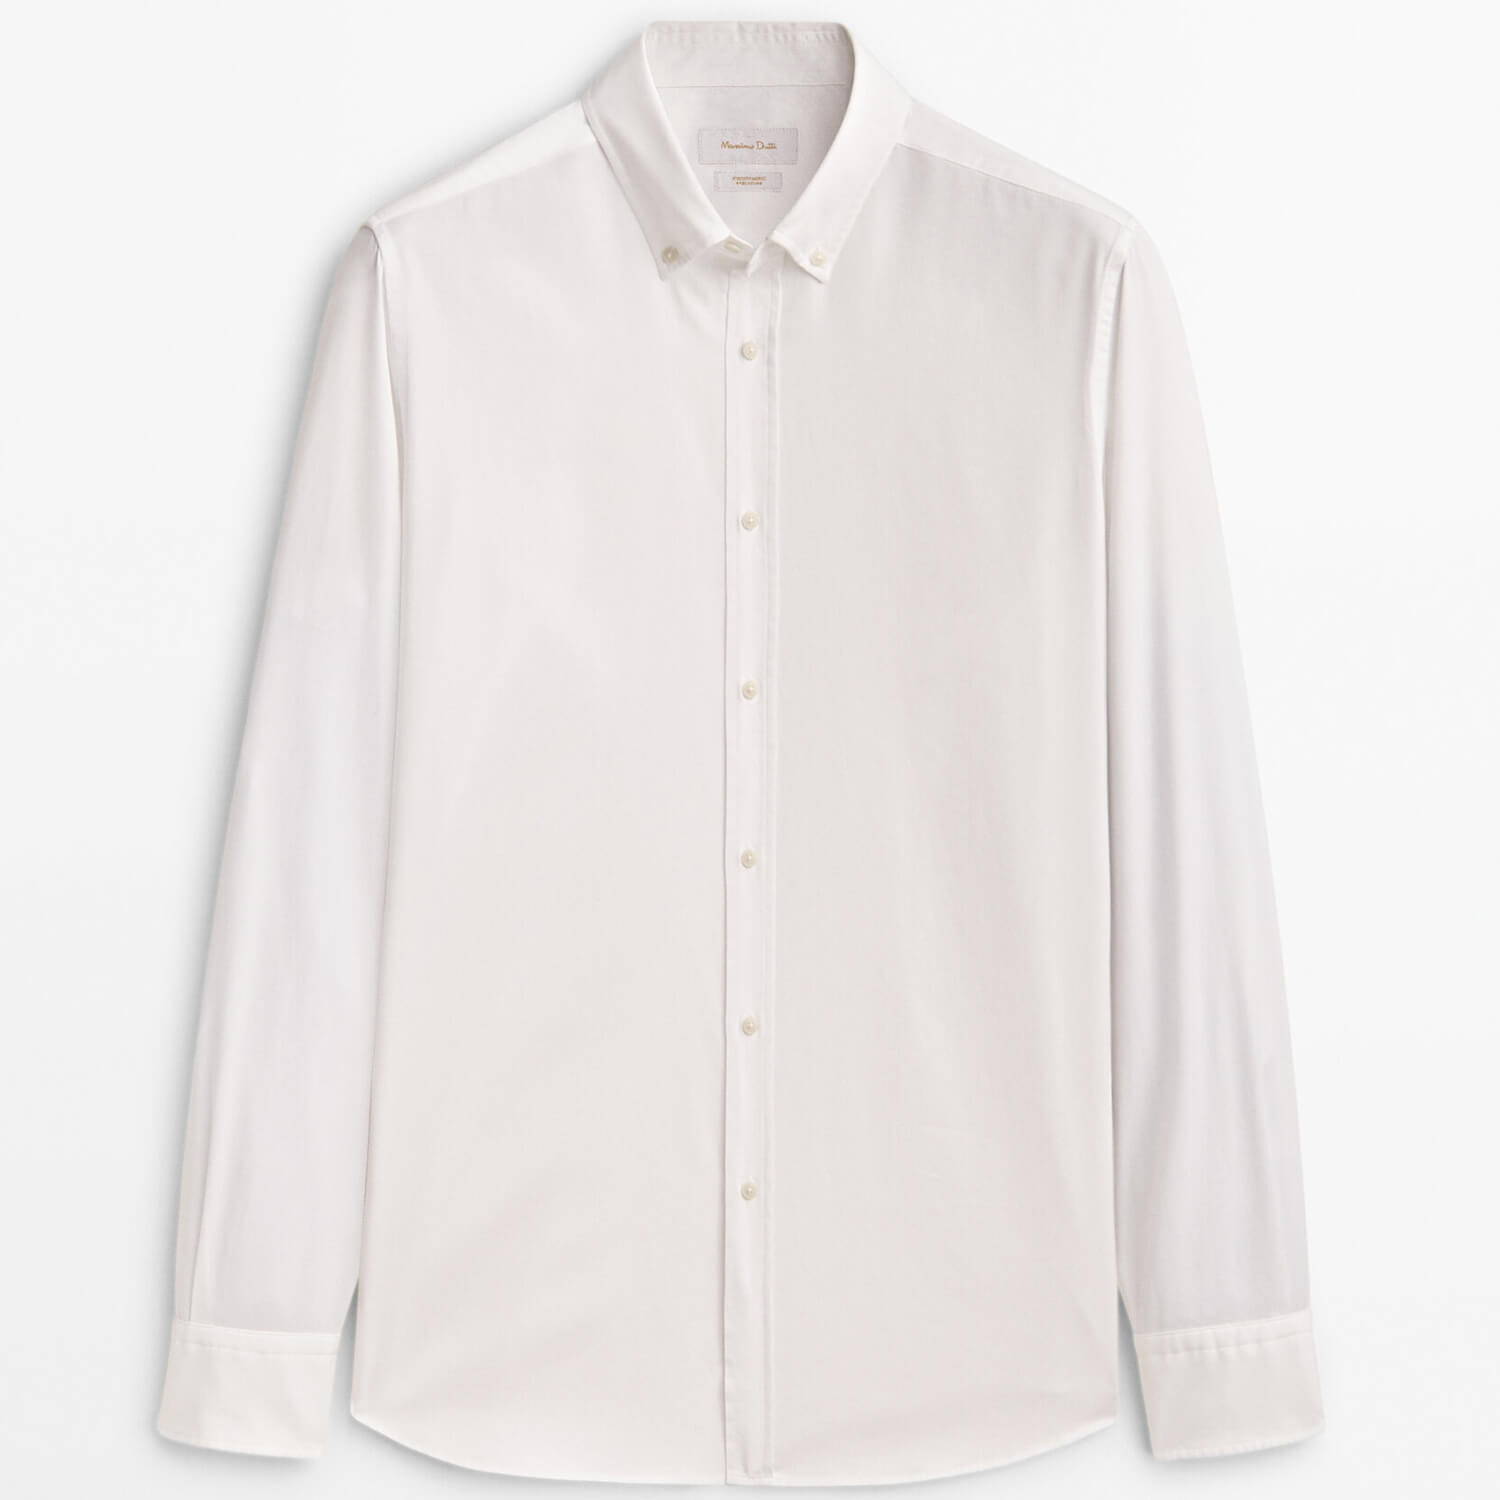 Рубашка Massimo Dutti Regular Fit Textured Cotton, белый рубашка massimo dutti regular fit striped poplin cotton белый